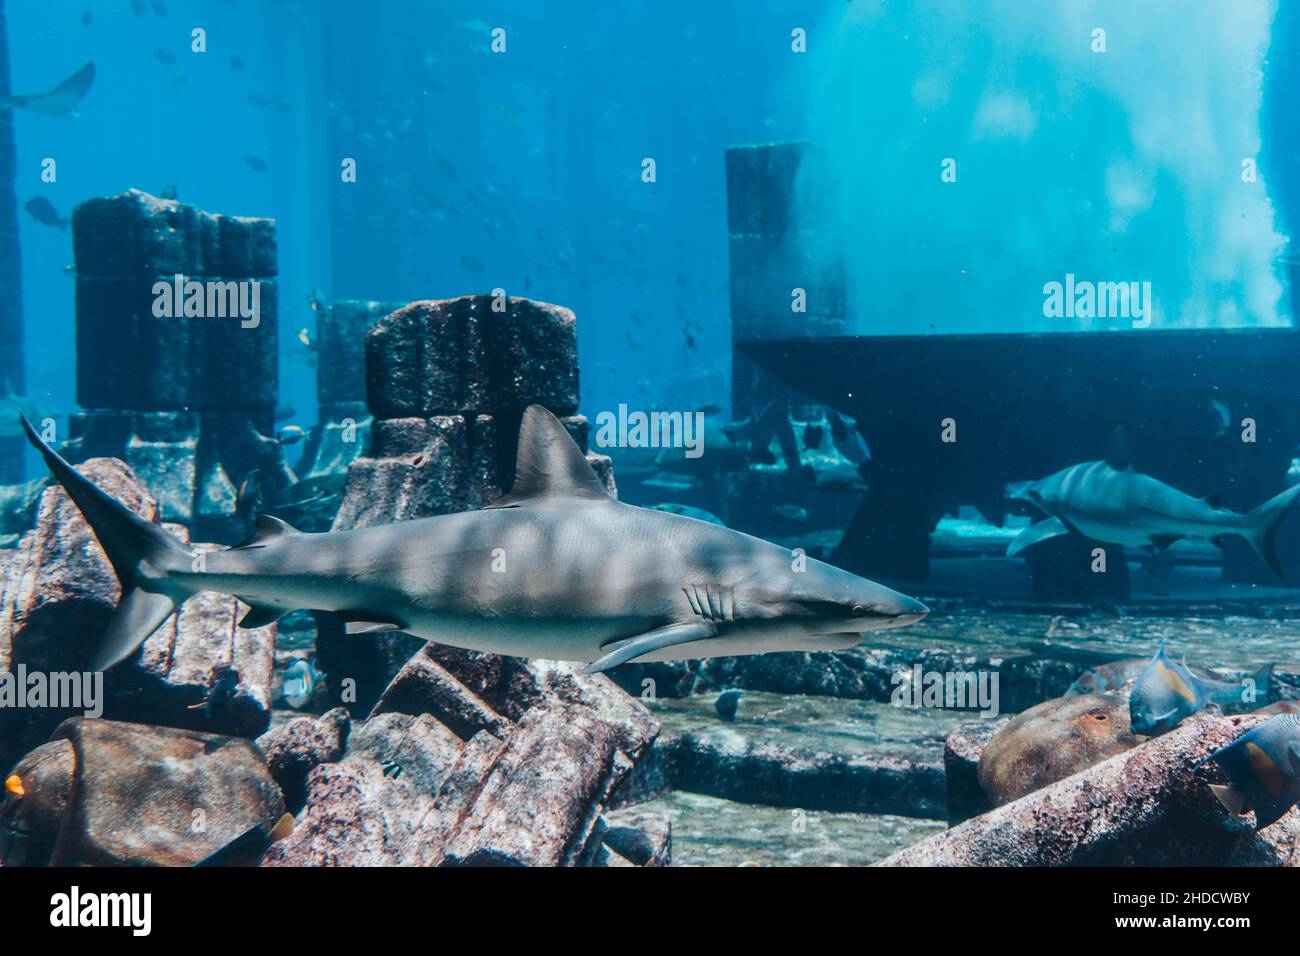 Shark swimming among a school of fish at the aquarium, underwater world. Stock Photo